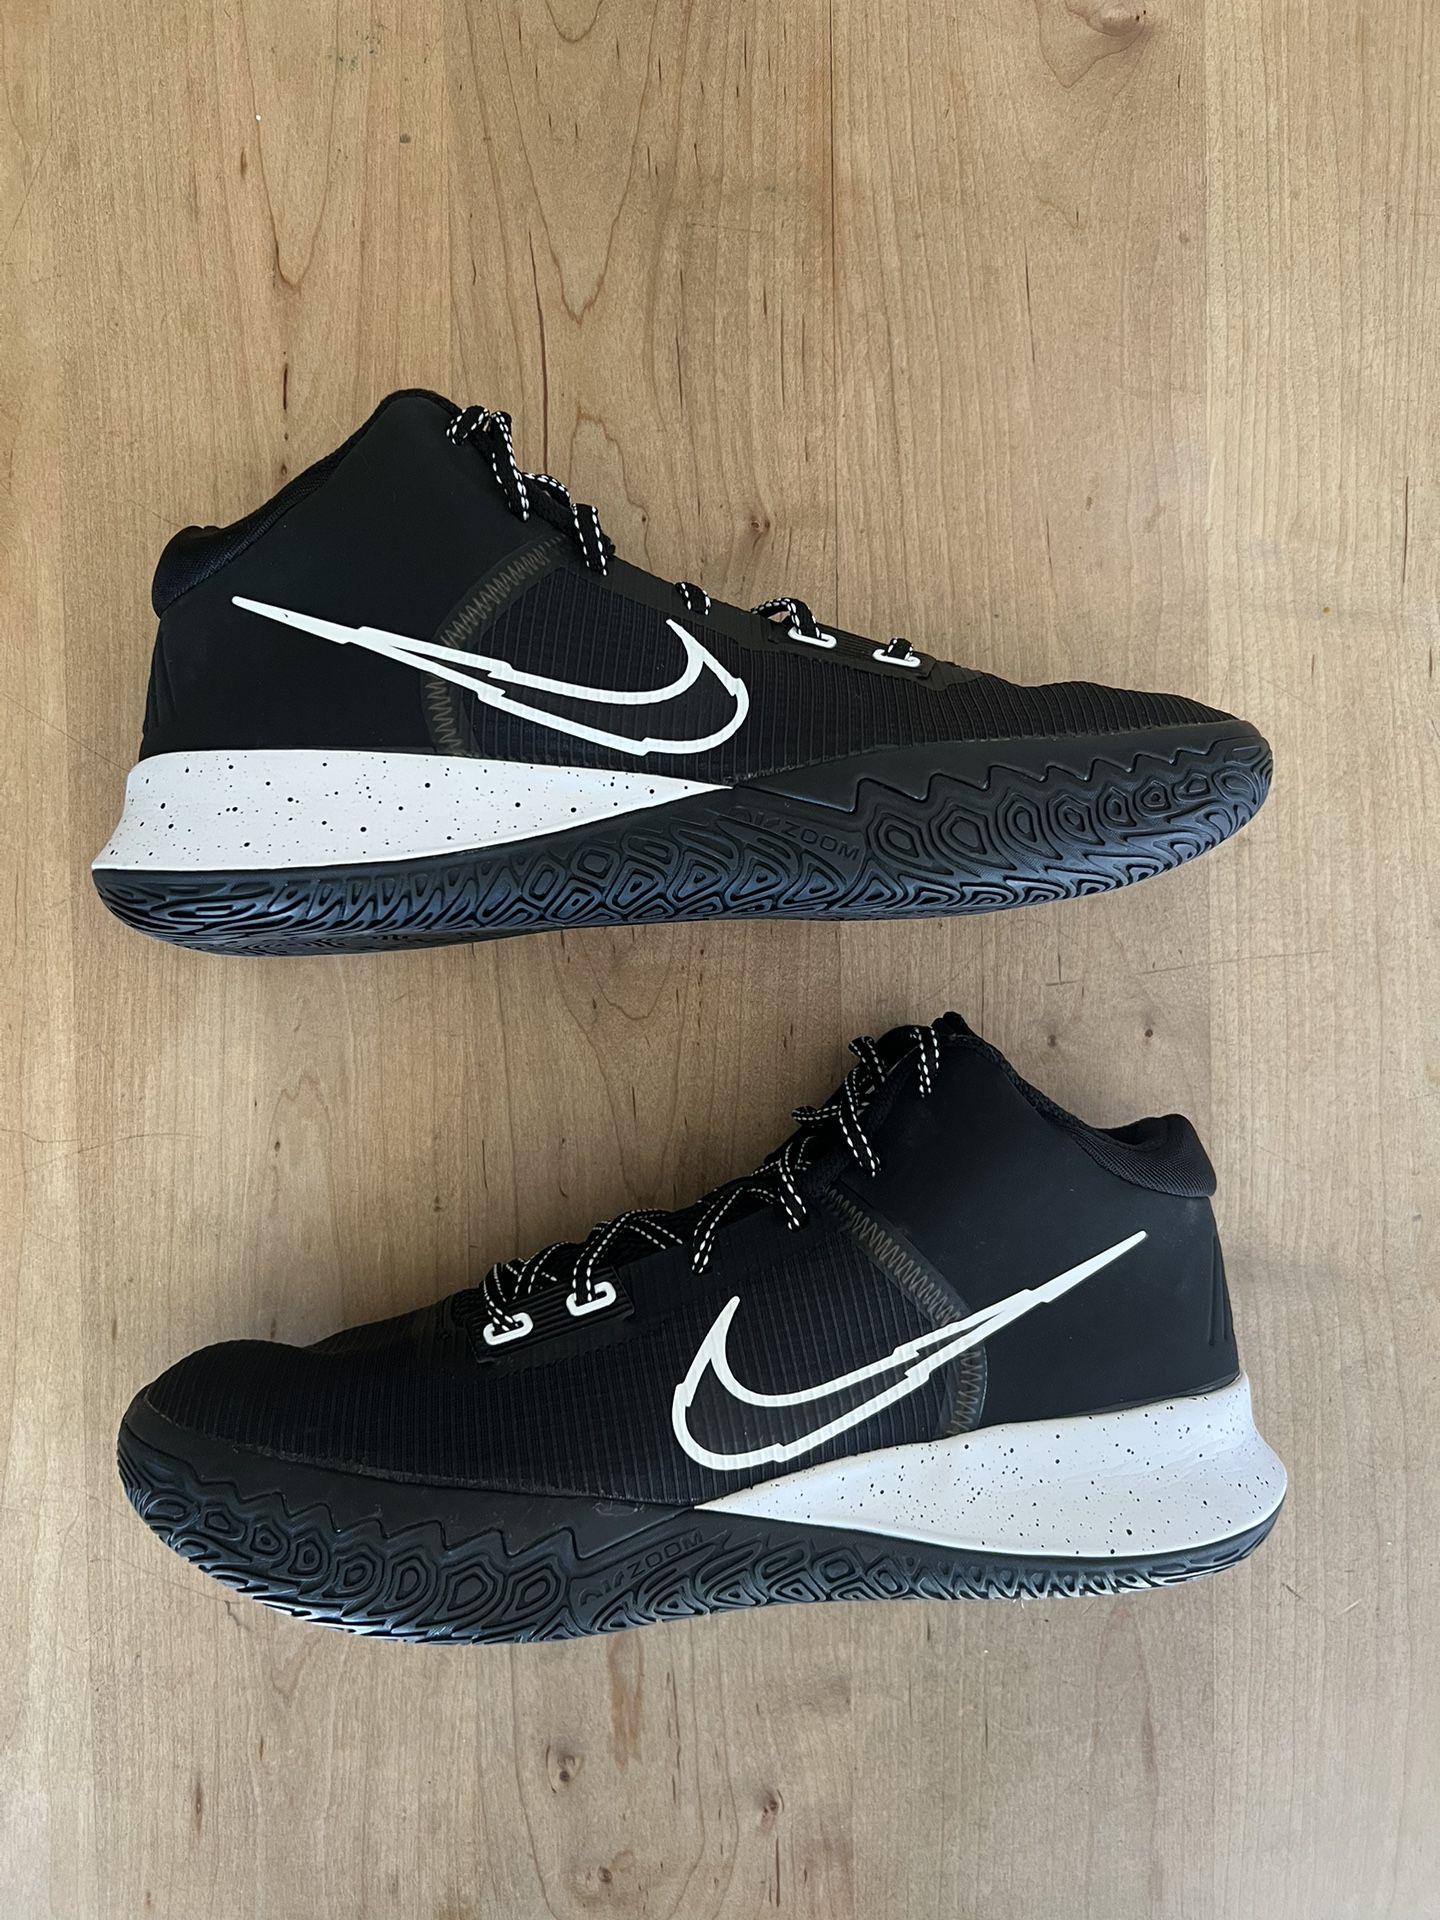 Nike Kyrie Irving Flytrap 4 Basketball Shoes Men’s 12 New! 